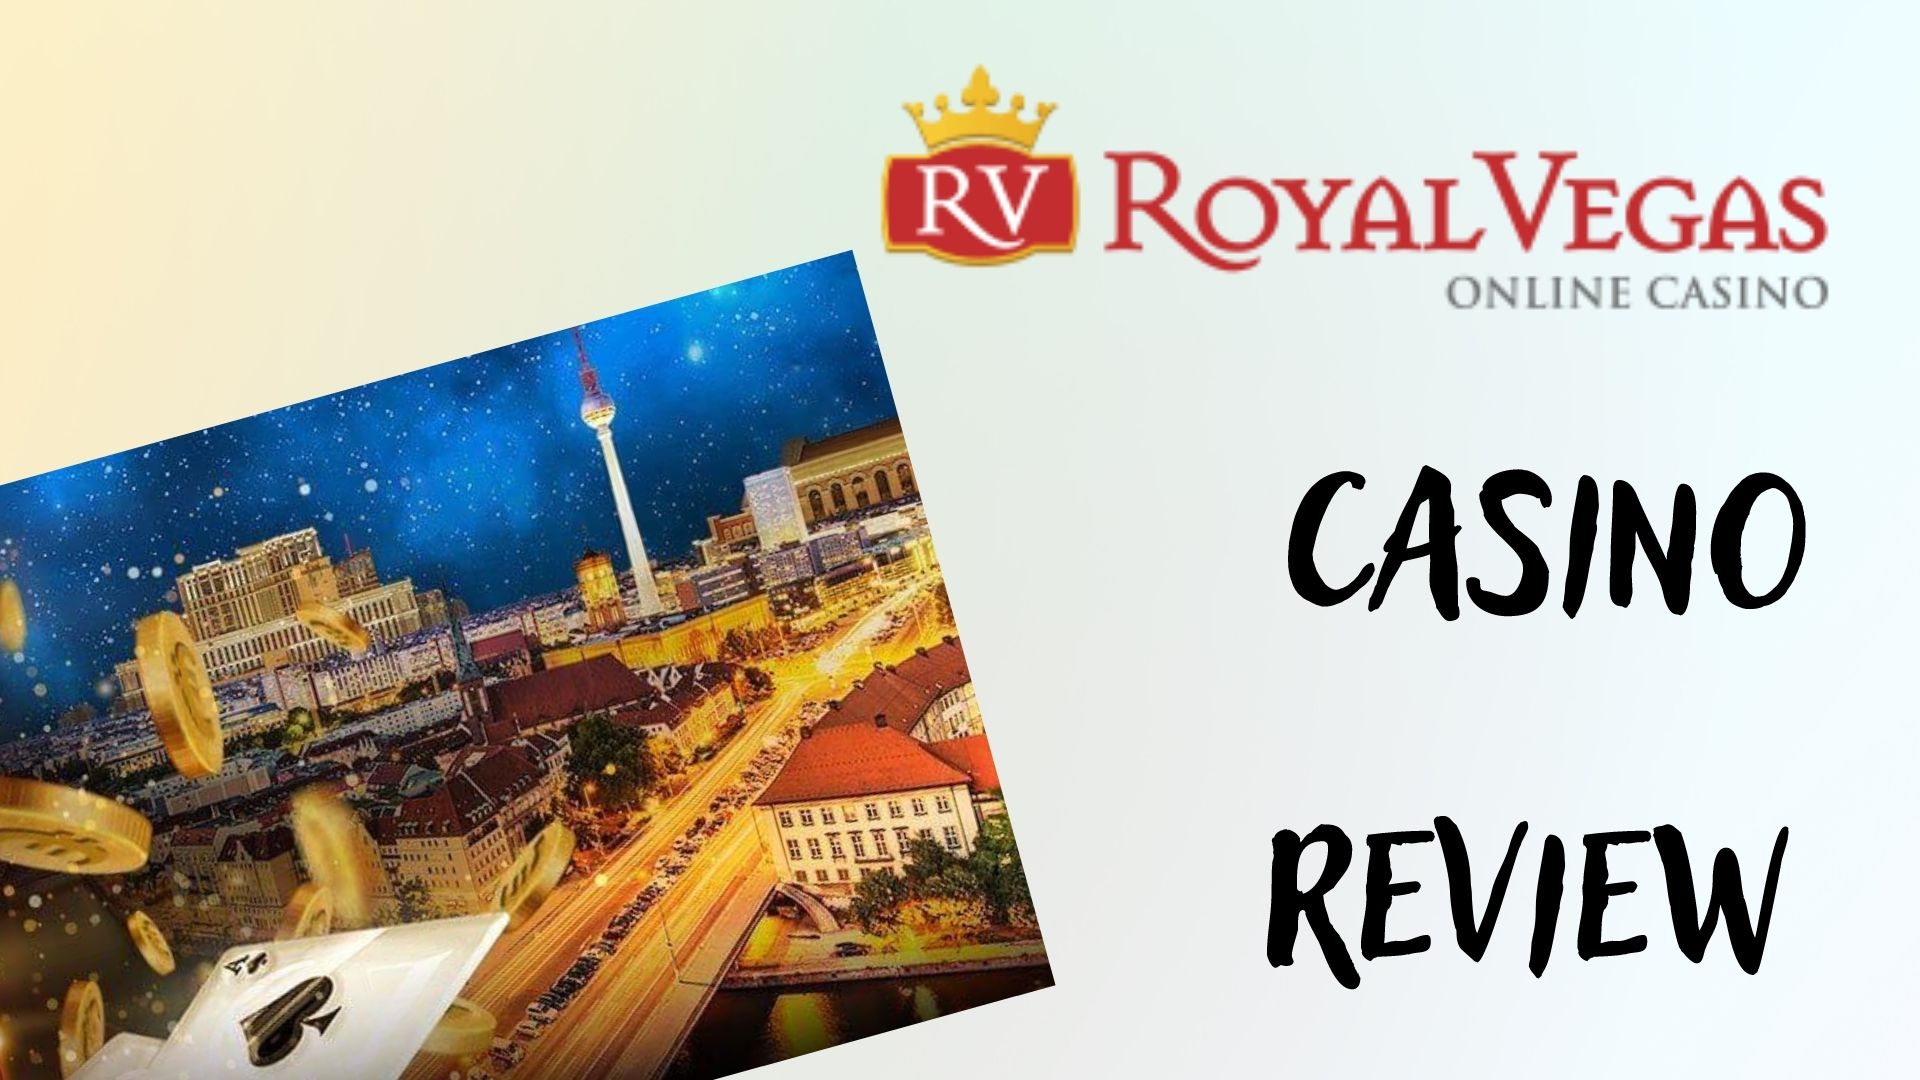 Royal Vegas Casino Review – General Information